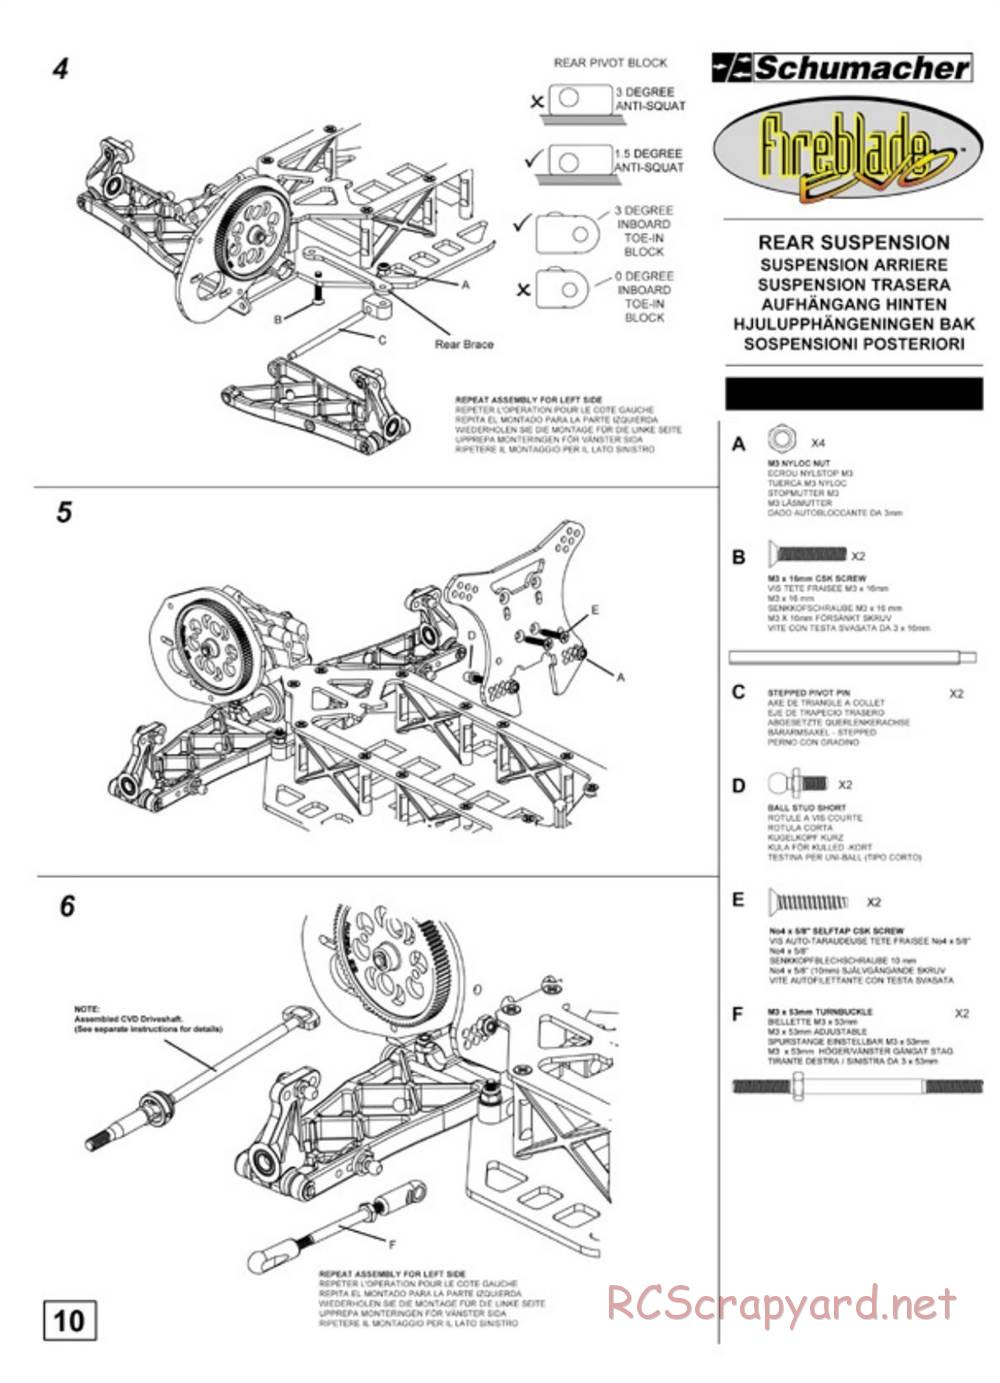 Schumacher - Fireblade Evo - Manual - Page 12